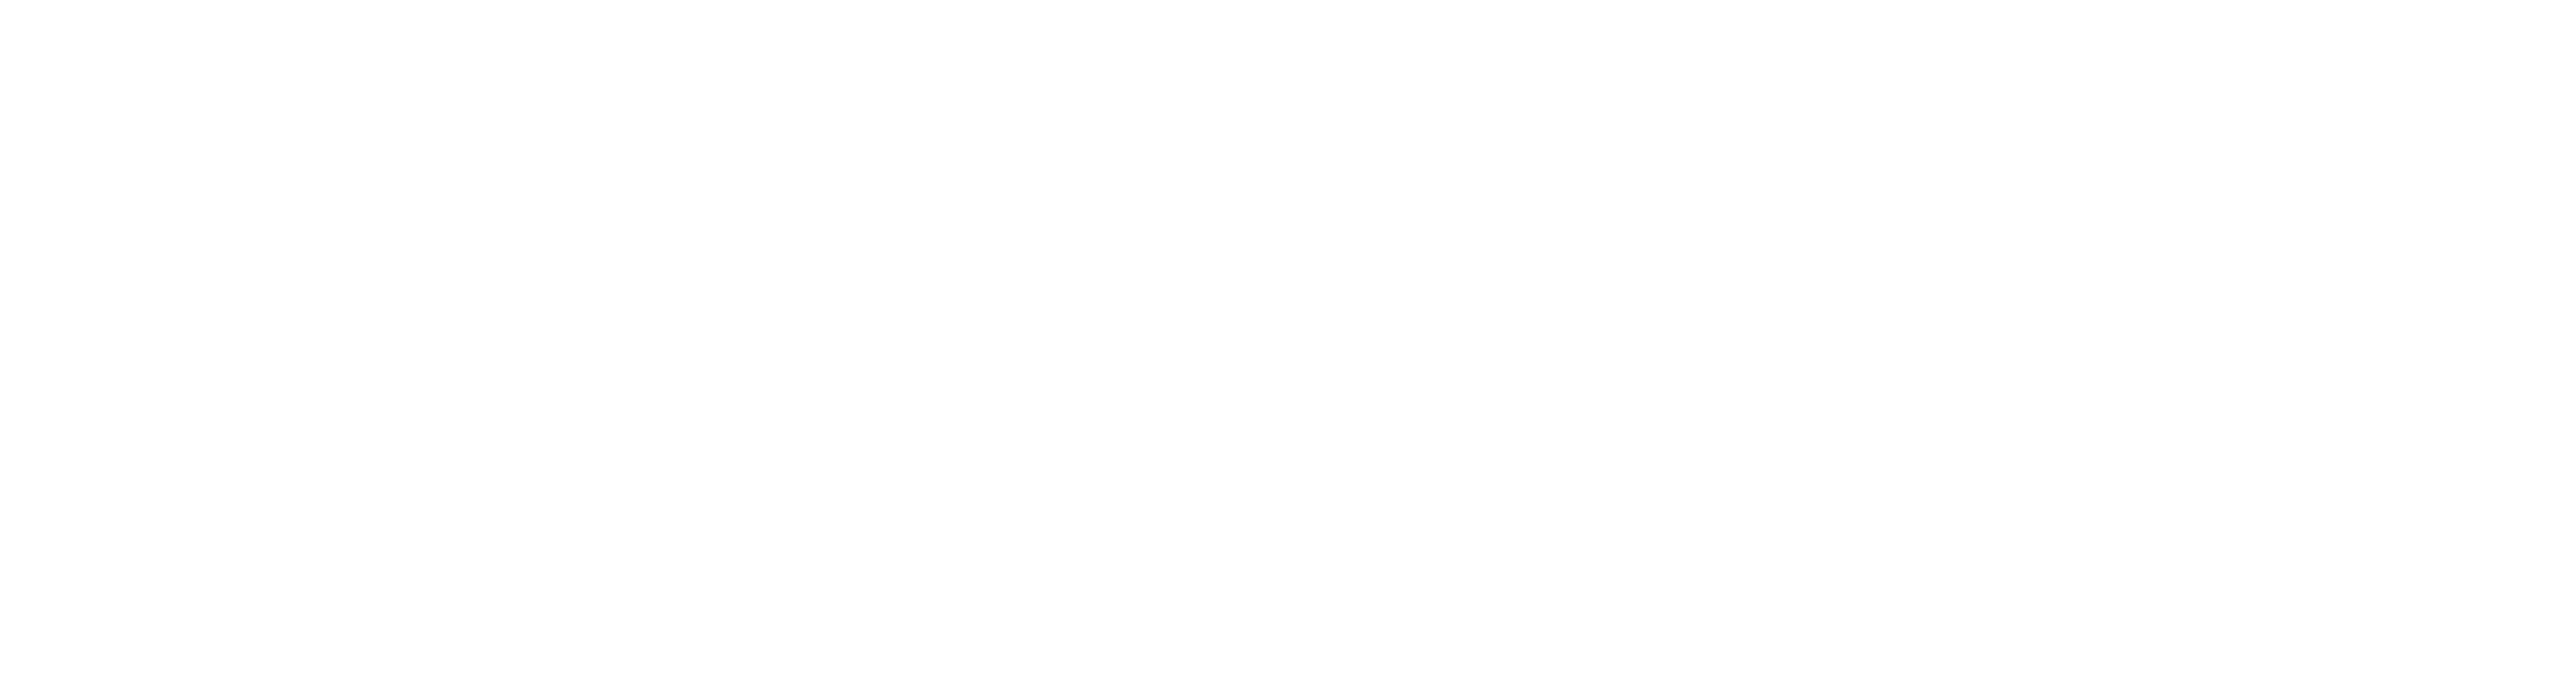 St. Thomas More Academy